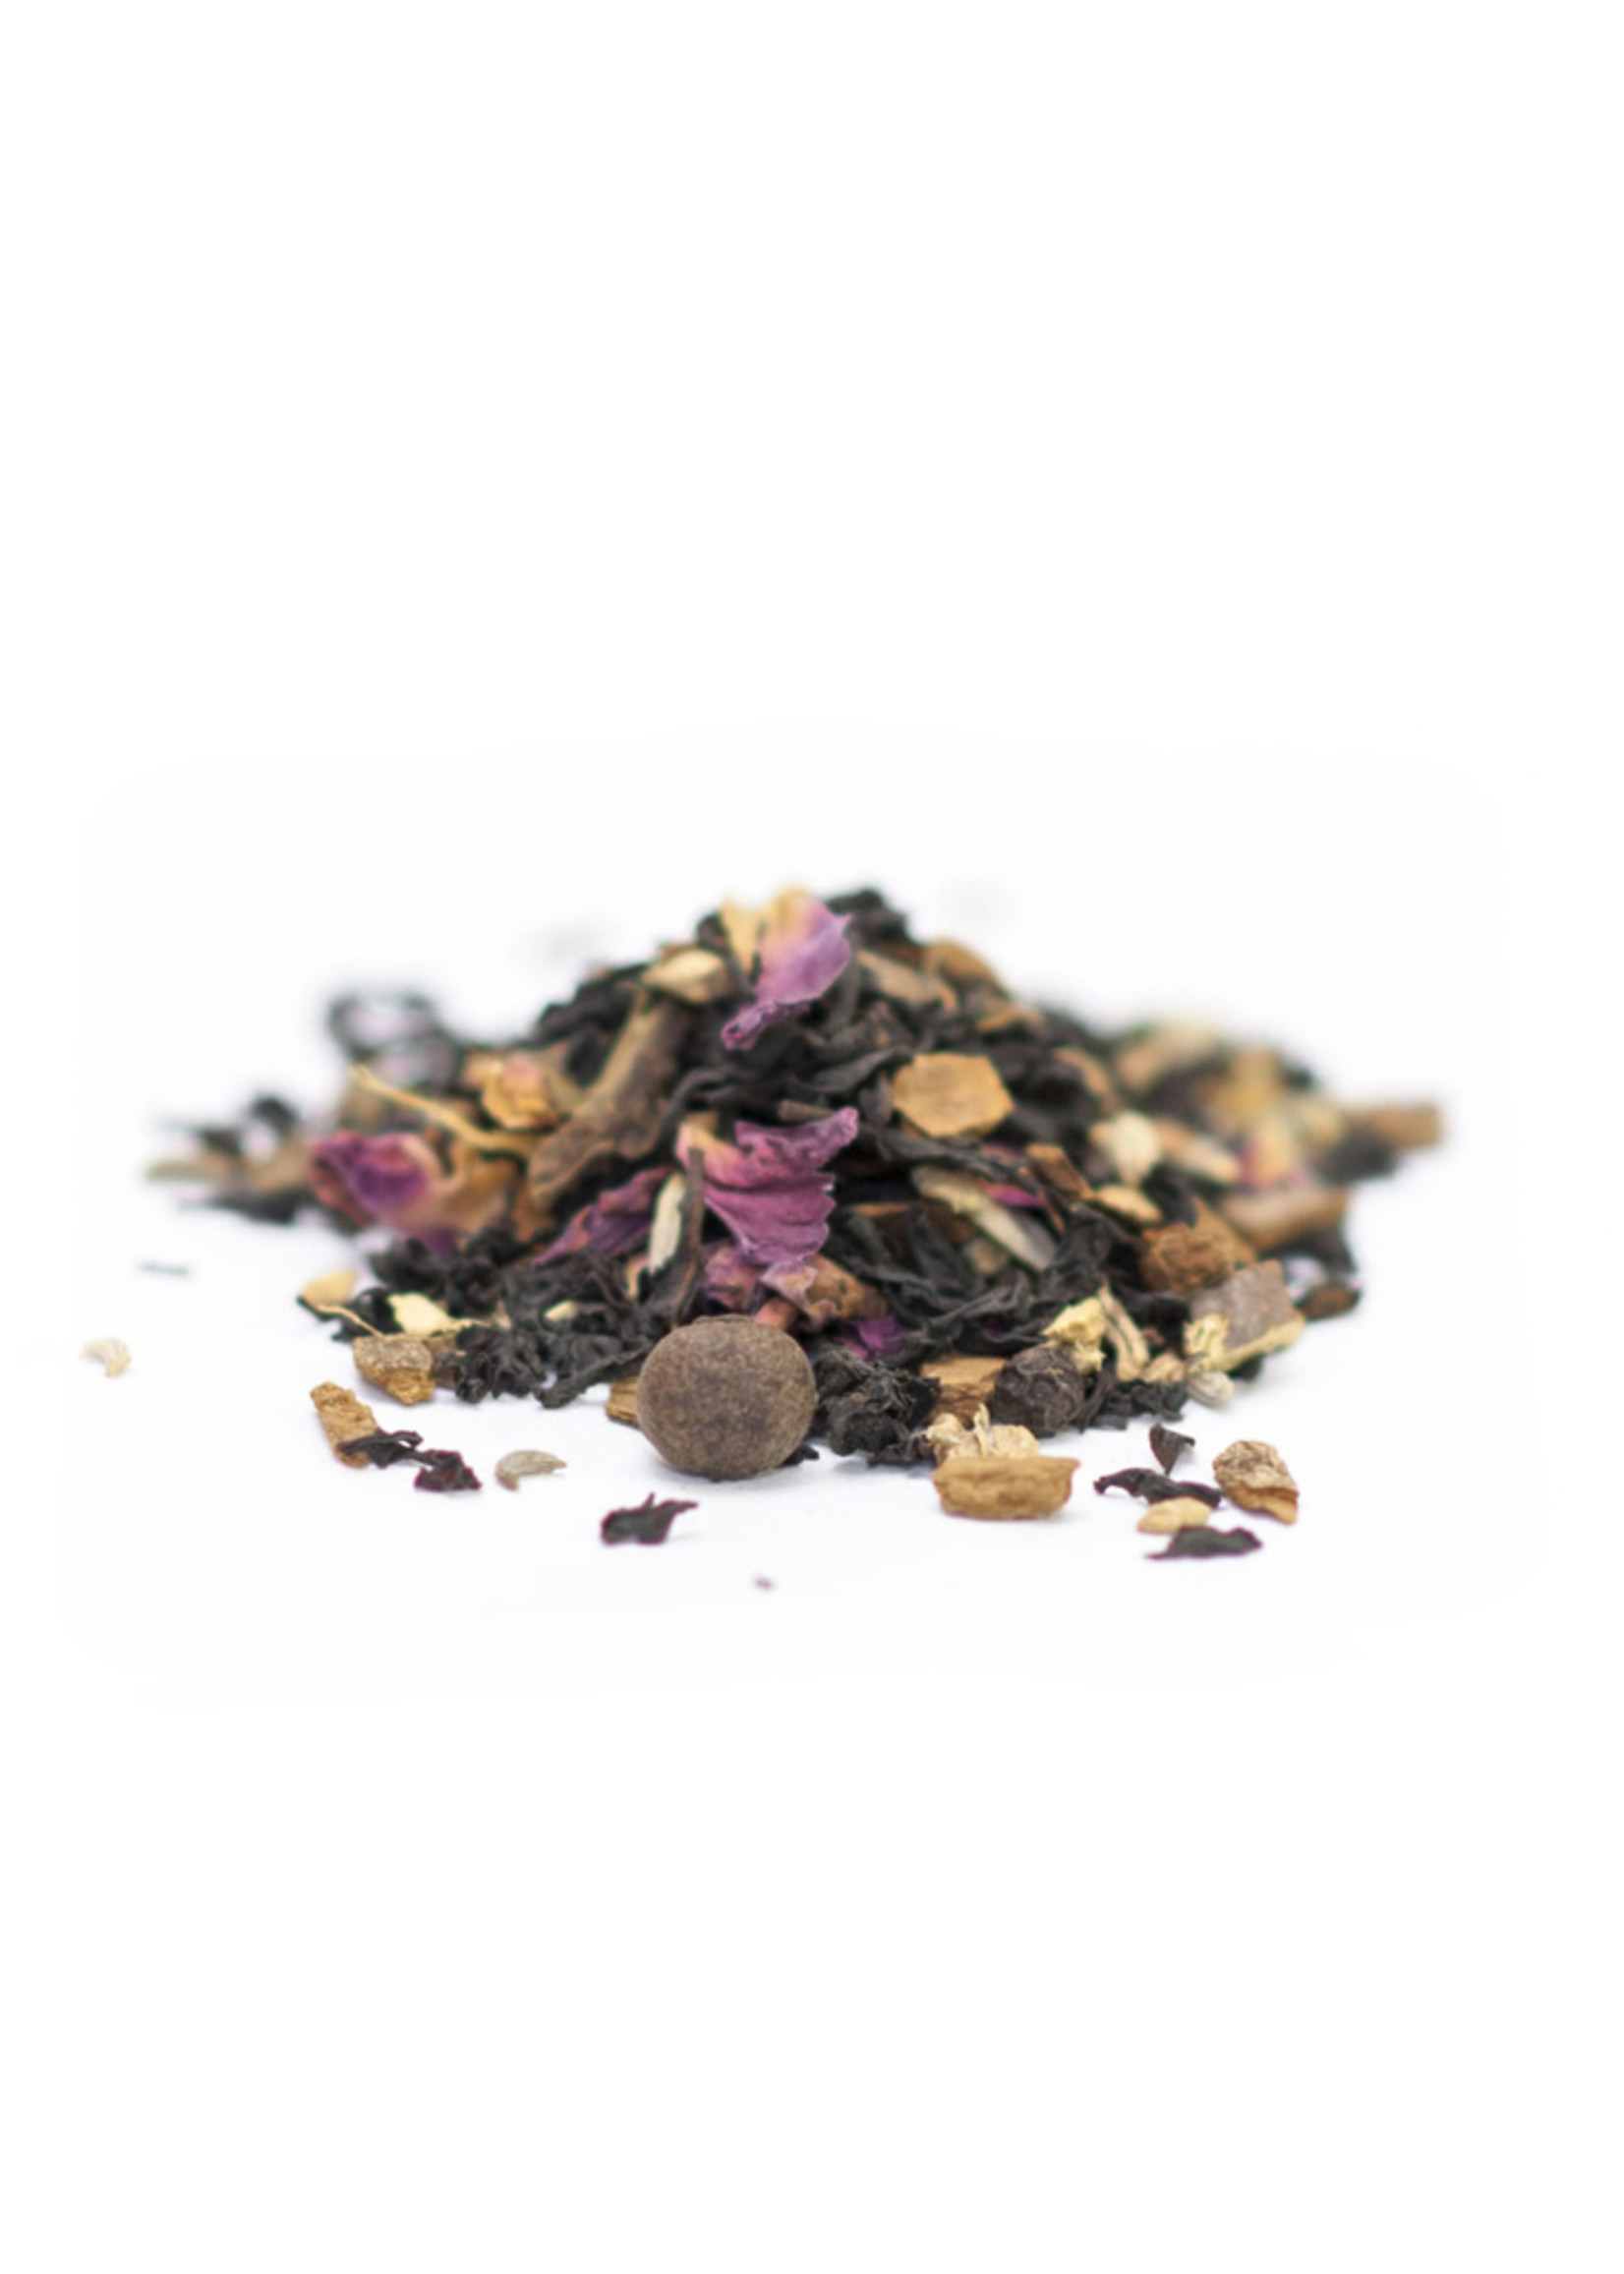 JusTea Loose Leaf Tea Tin - African Chai